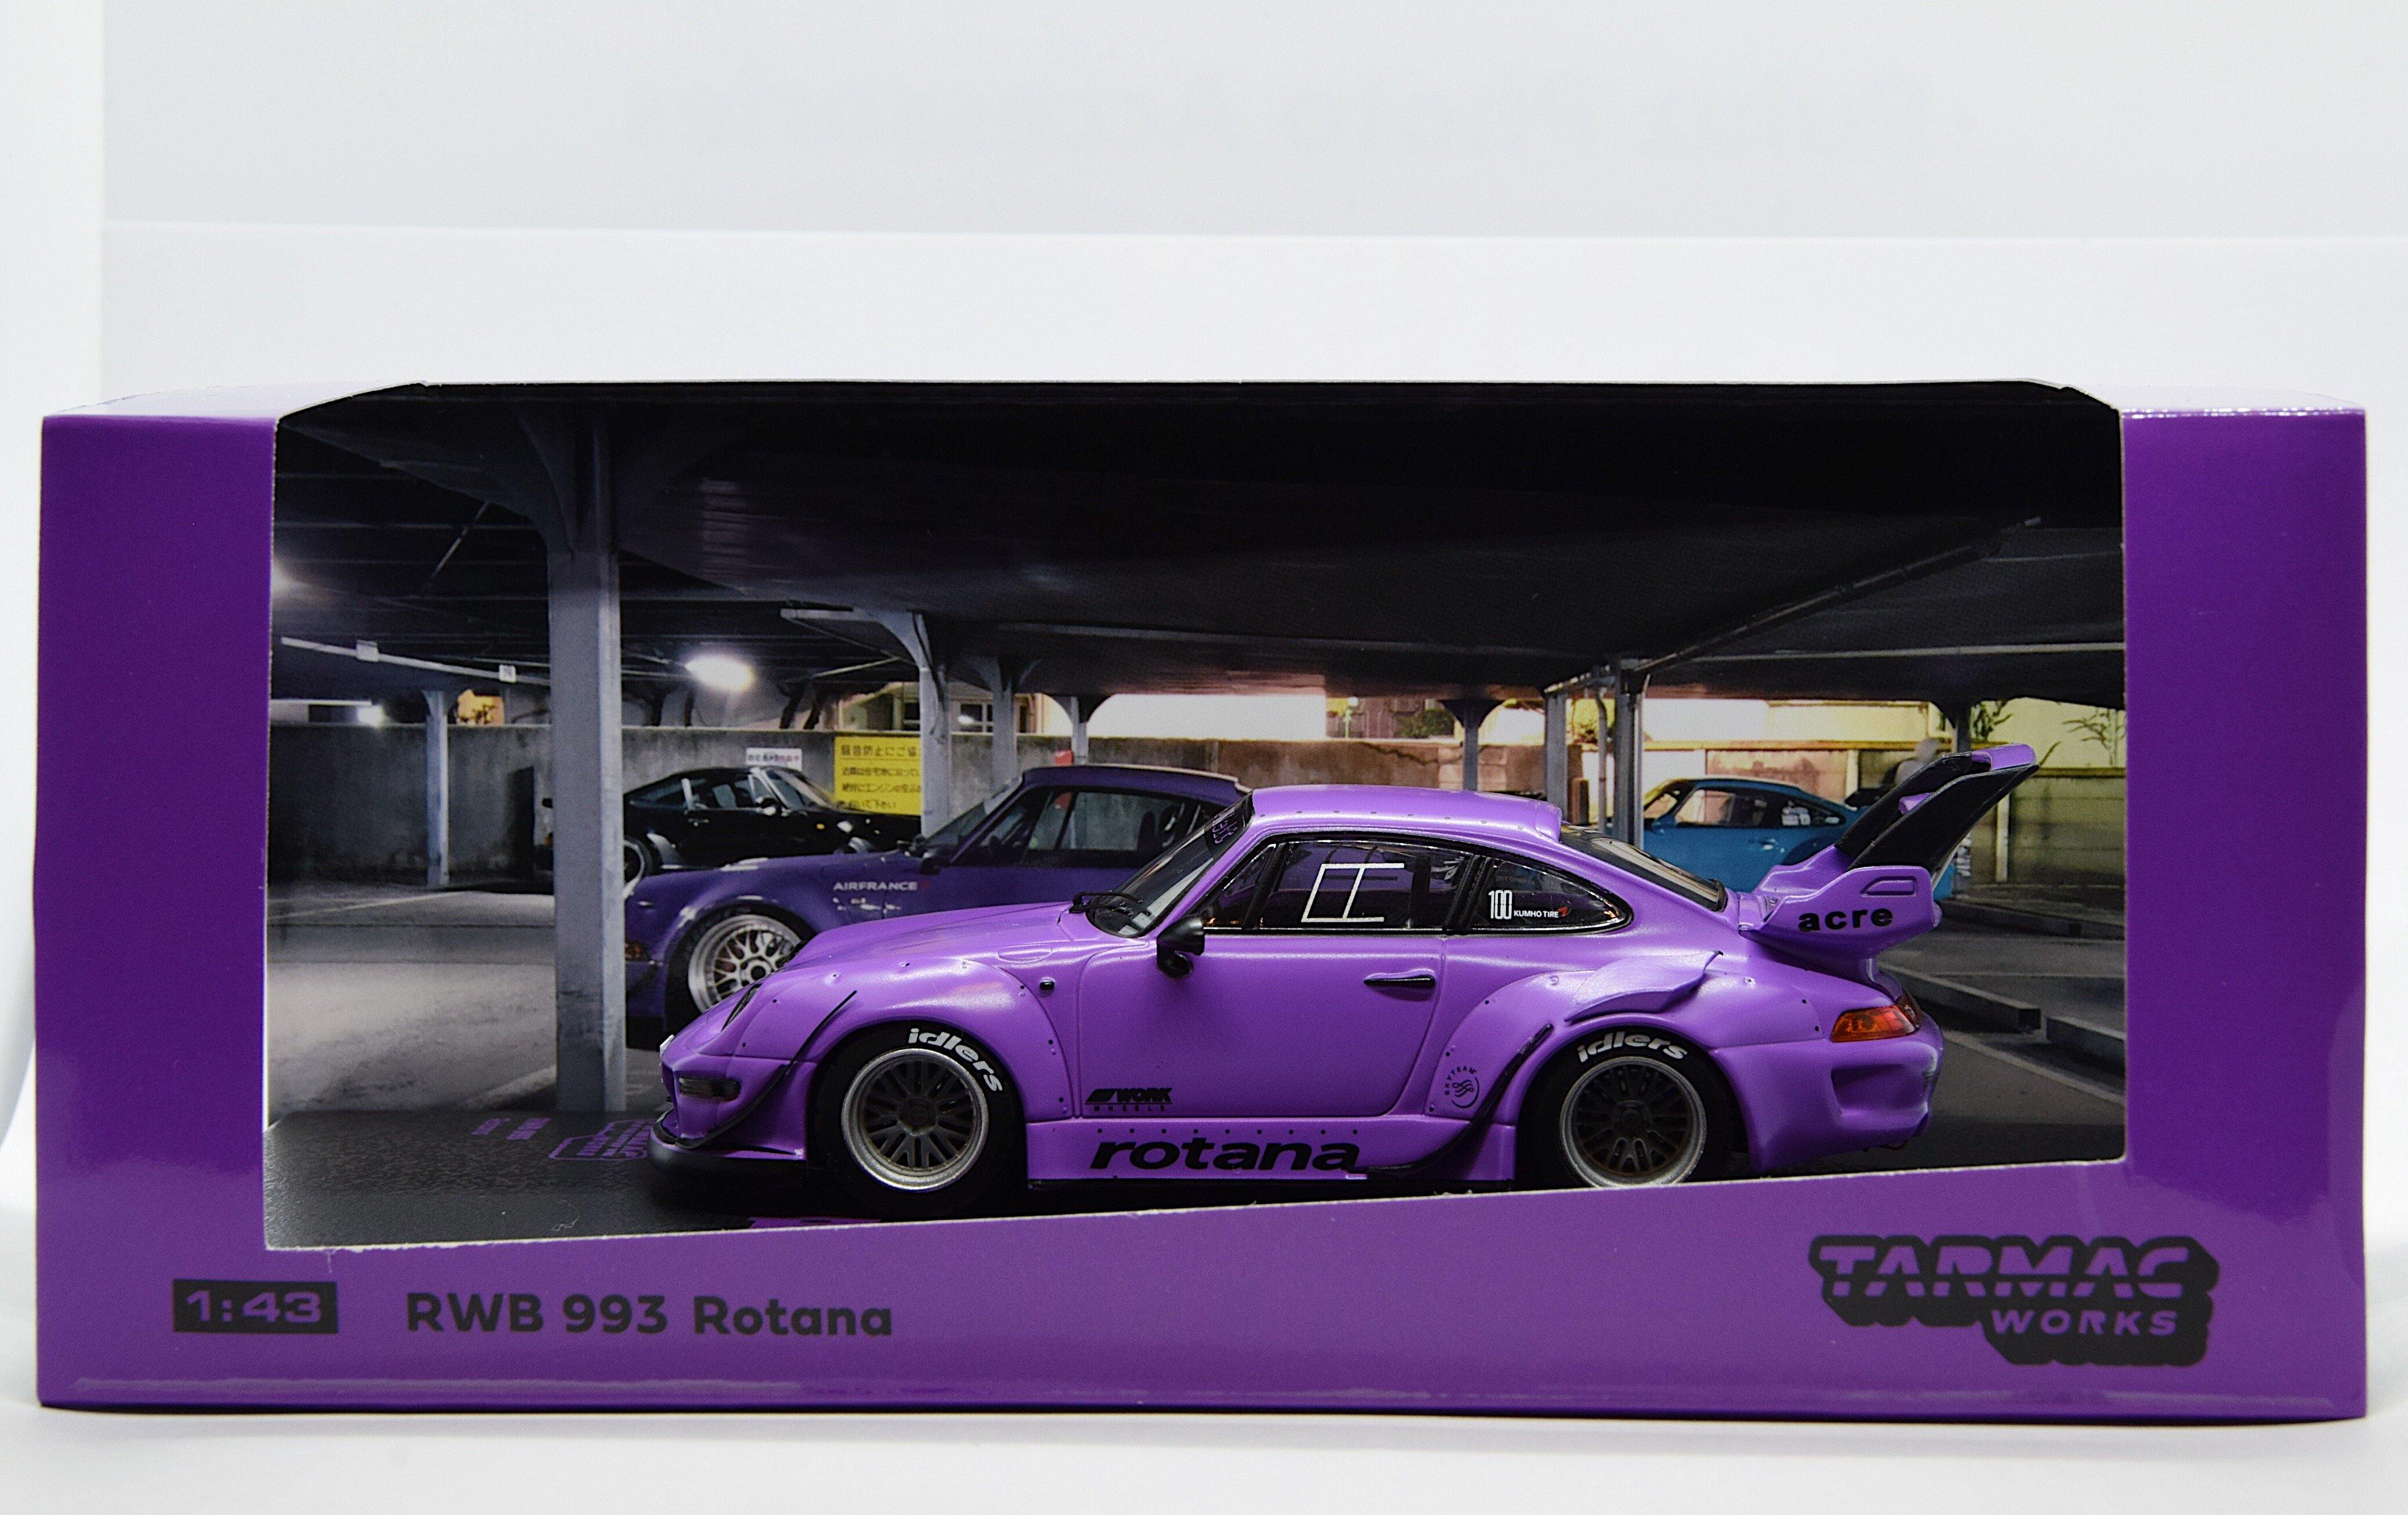 Tarmac Works 1:43 RWB 993 Rotana Limited Edition (Purple 